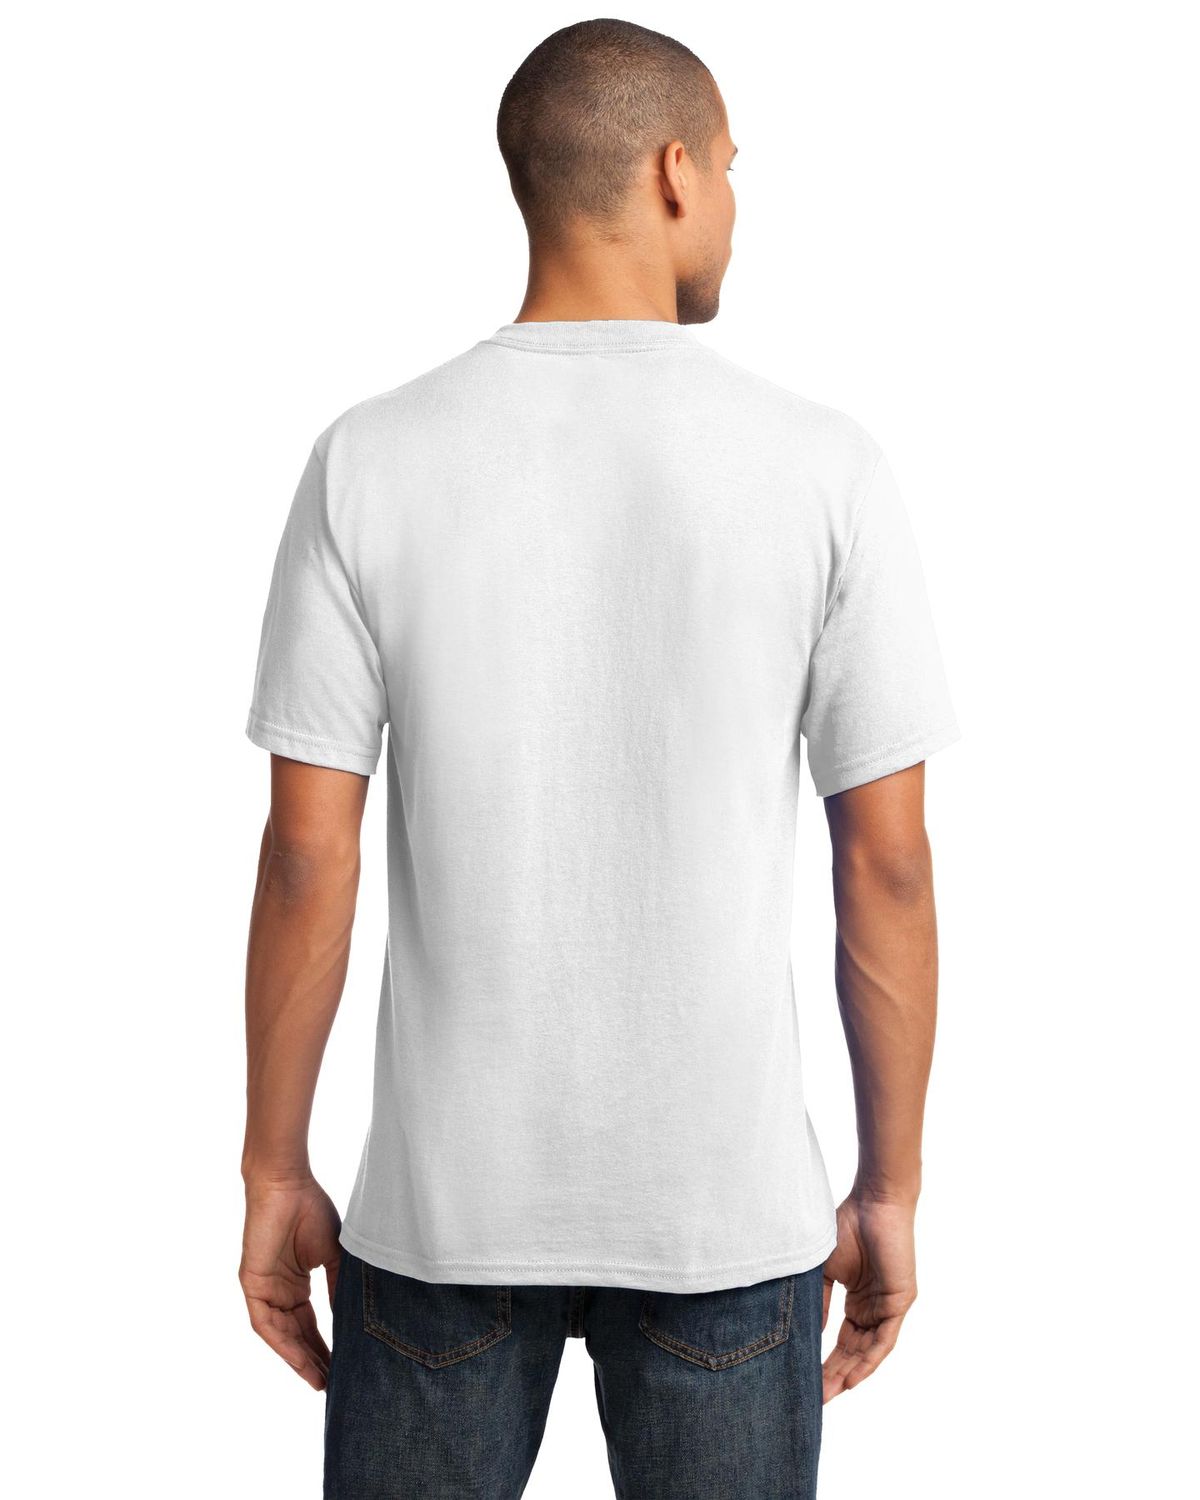 'Port & Company PC54V Men's V-Neck T-Shirt'